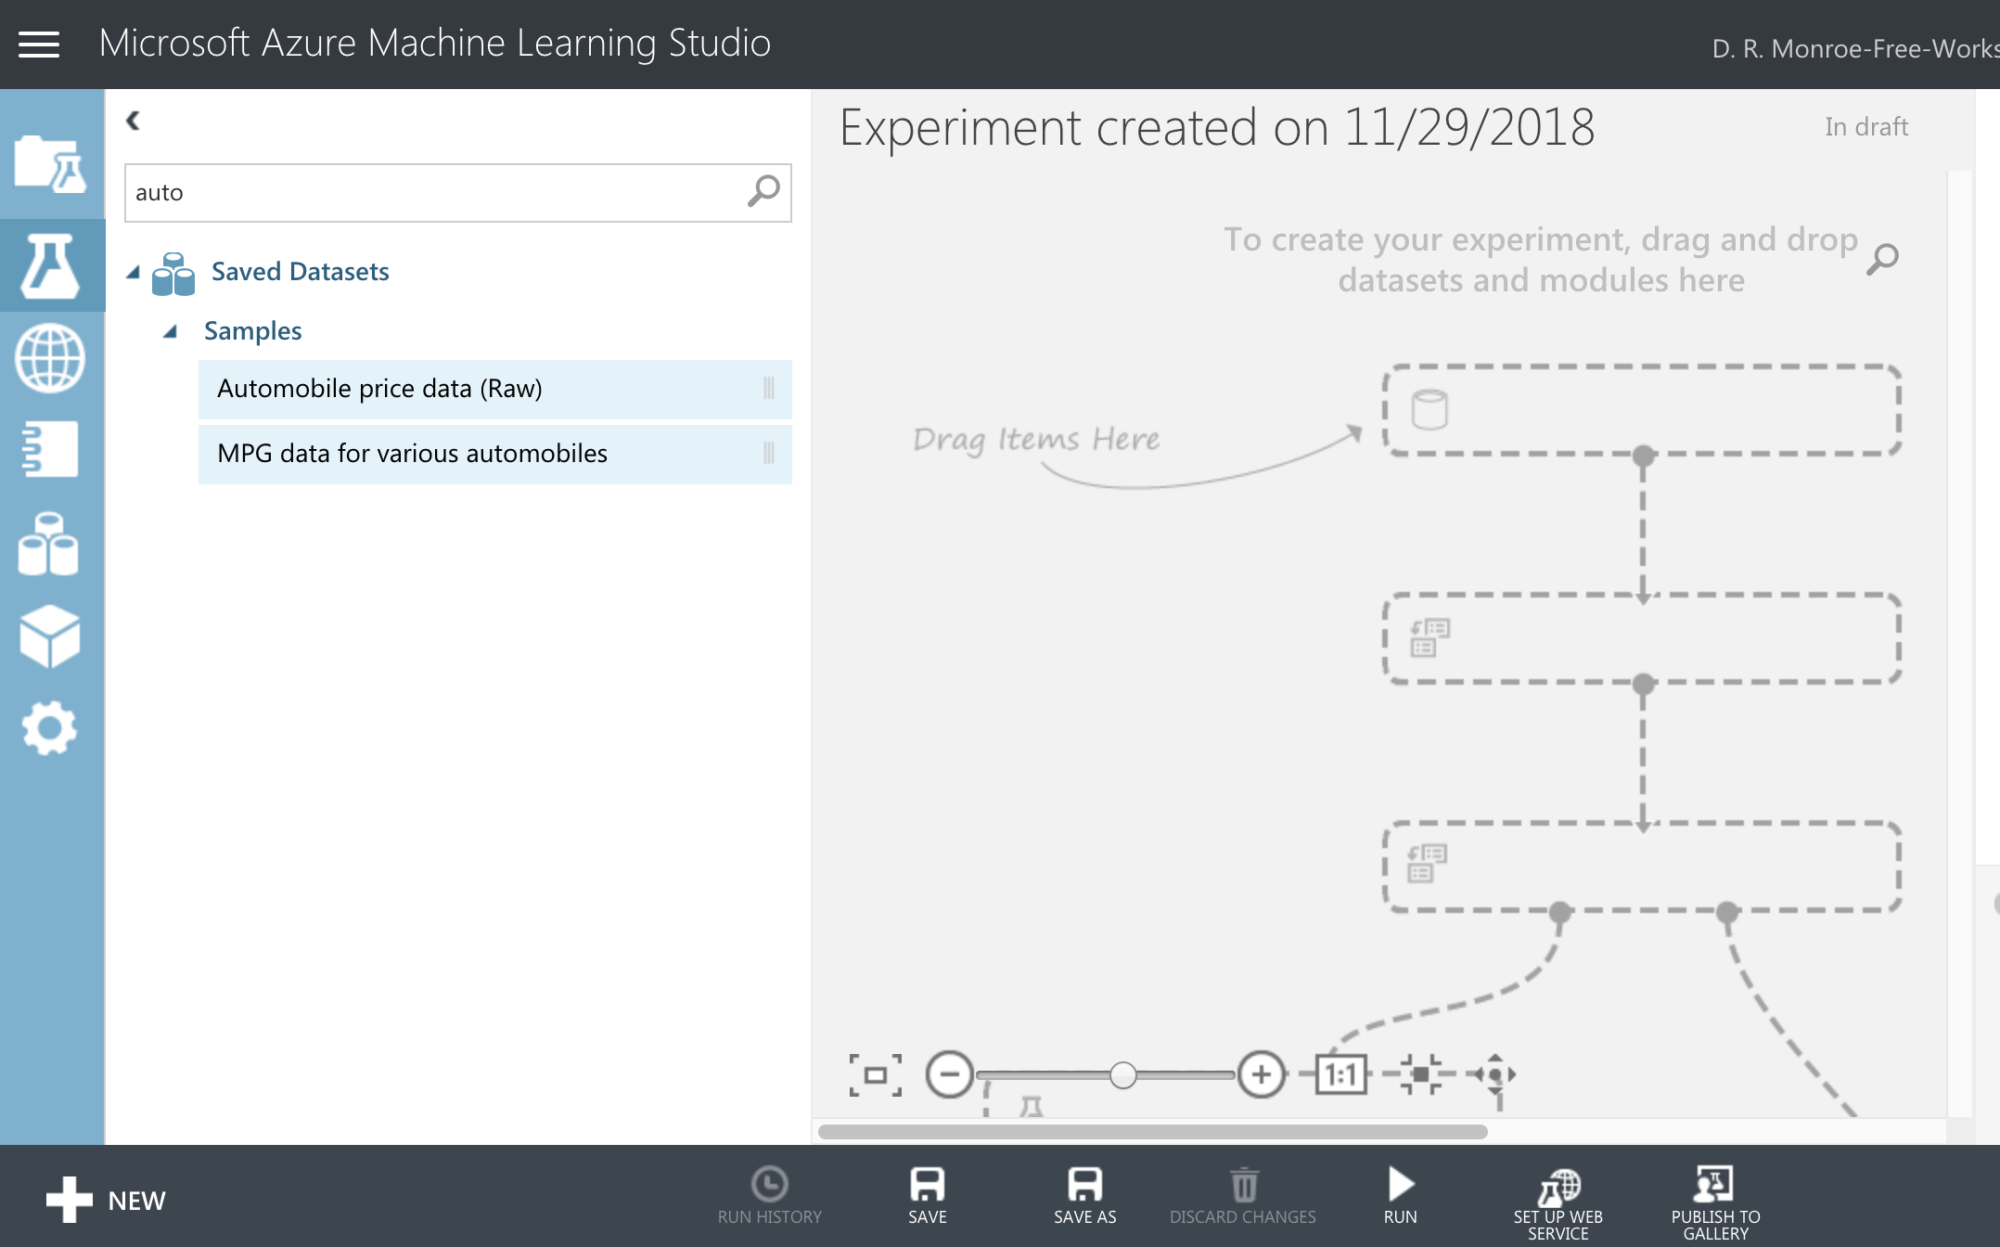 Microsoft Azure Machine Learning Studio